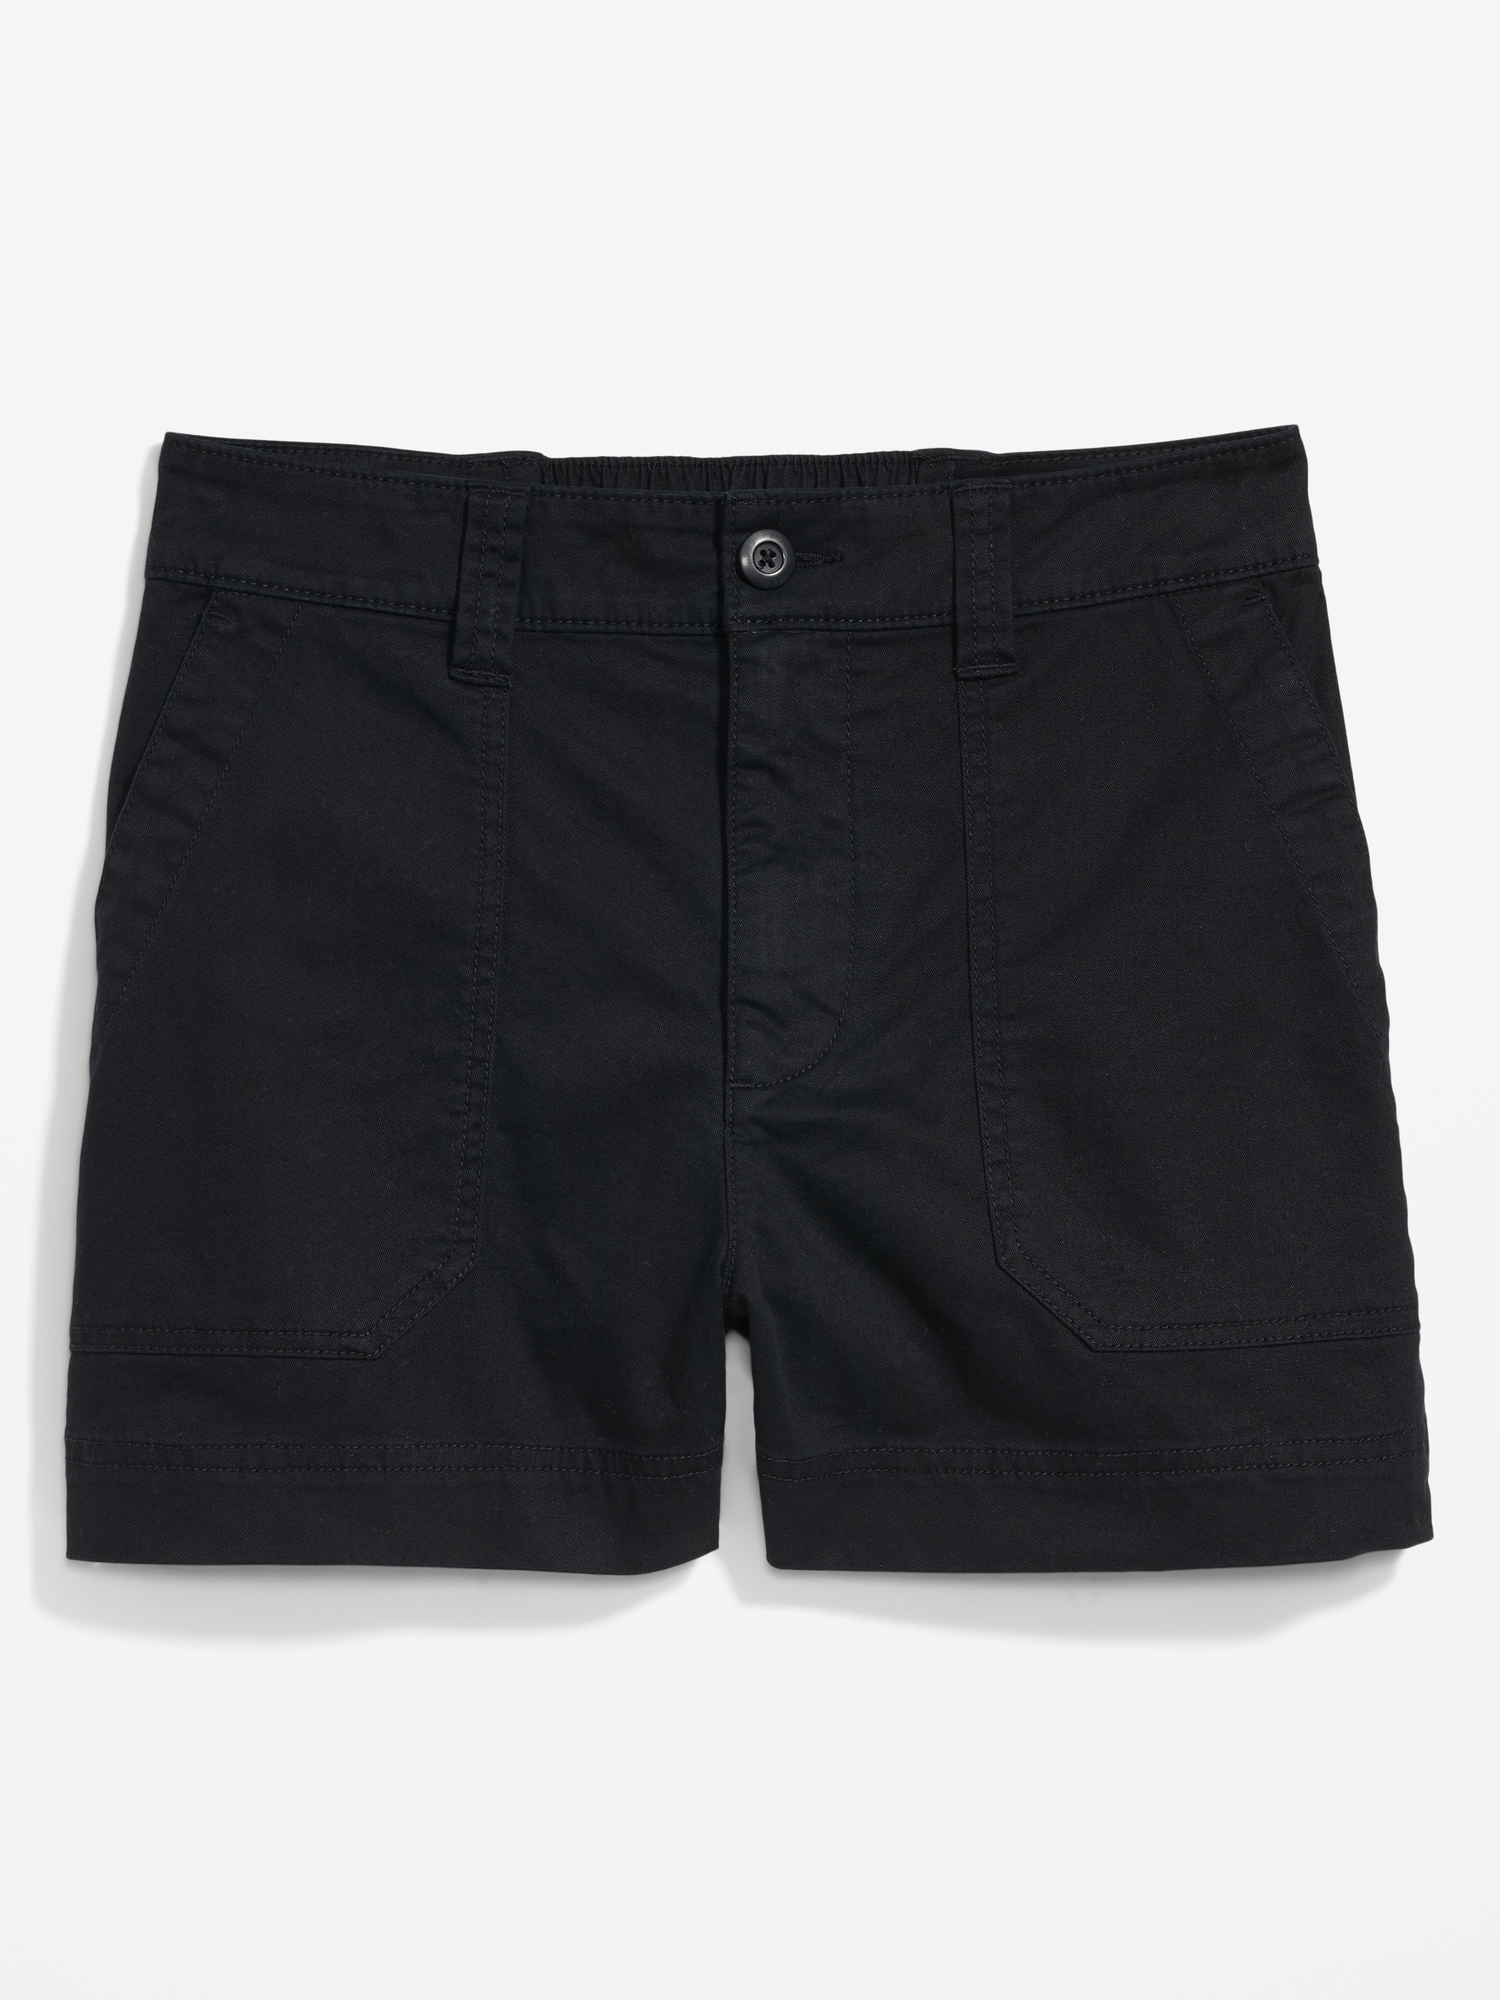 High-Waisted OGC Chino Shorts - 3.5-inch inseam